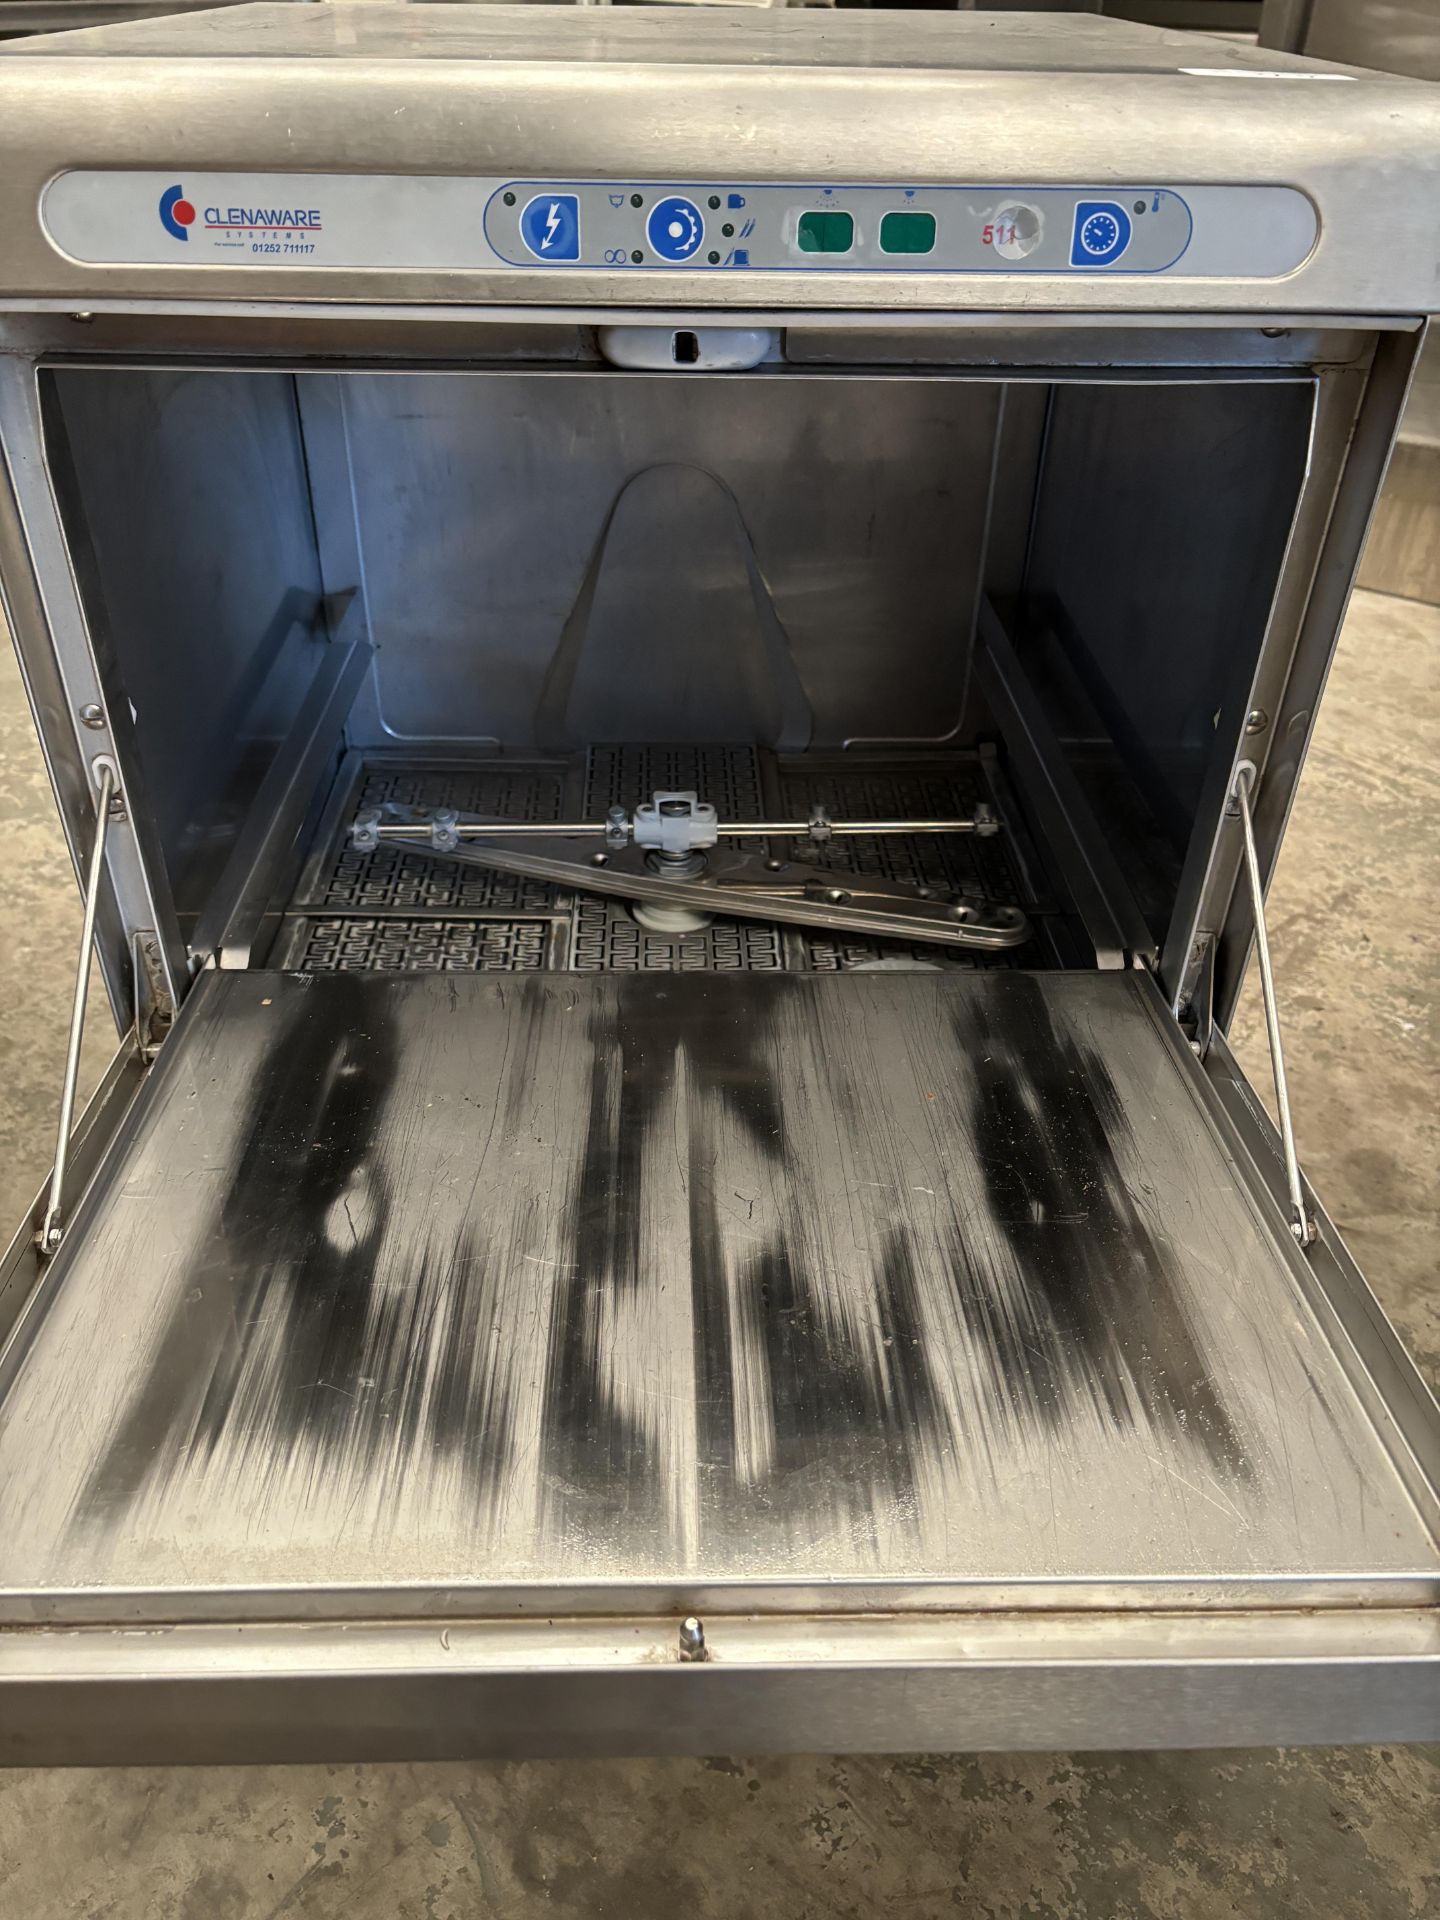 Cleanaware Undercounter Dishwasher - Image 2 of 3